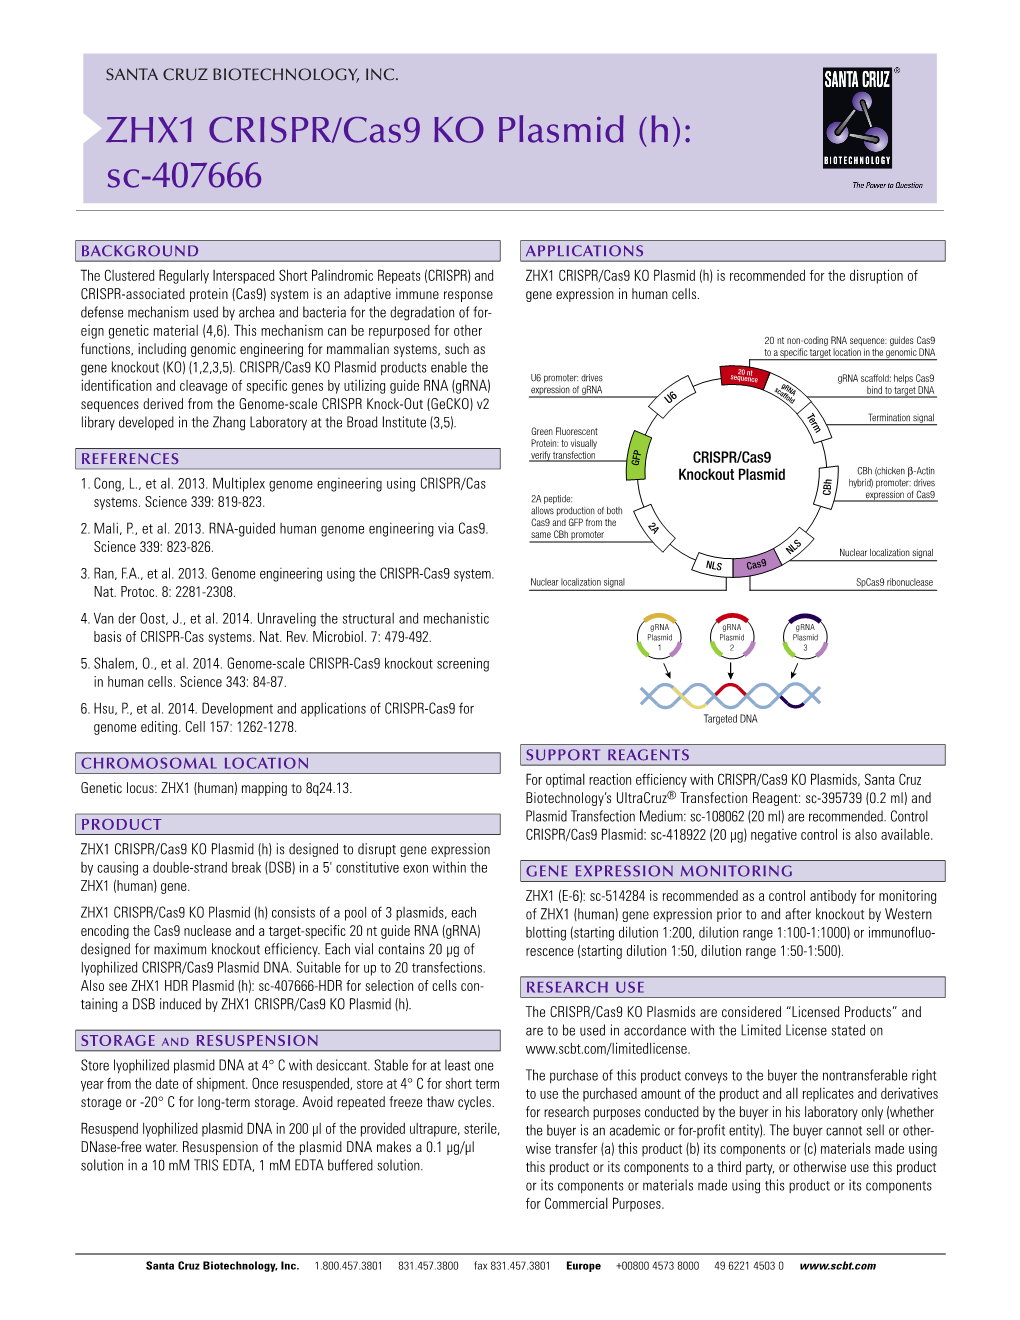 ZHX1 CRISPR/Cas9 KO Plasmid (H): Sc-407666